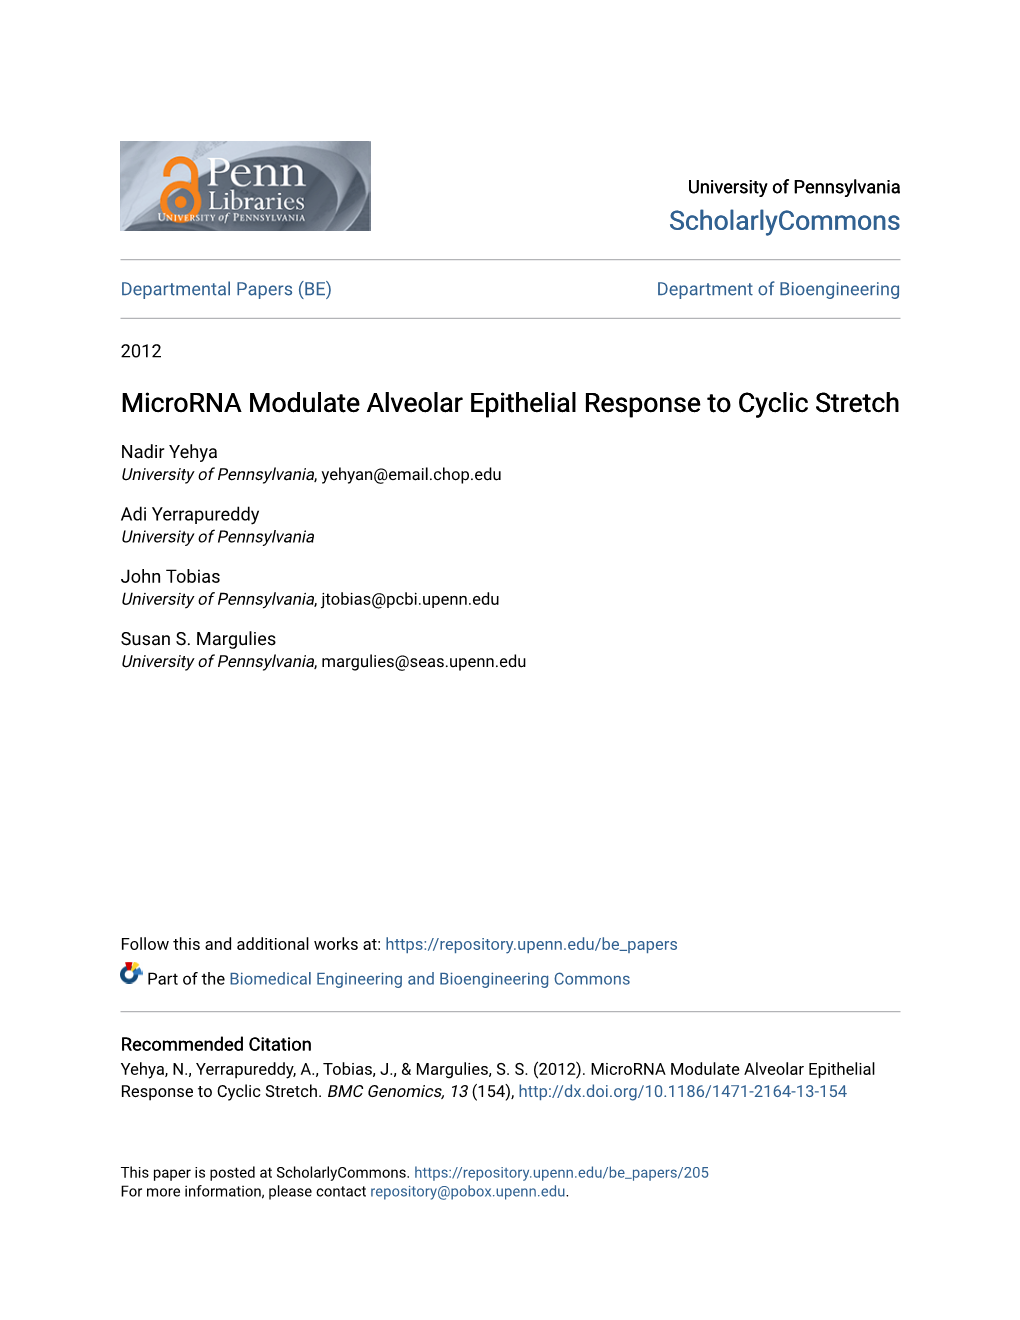 Microrna Modulate Alveolar Epithelial Response to Cyclic Stretch